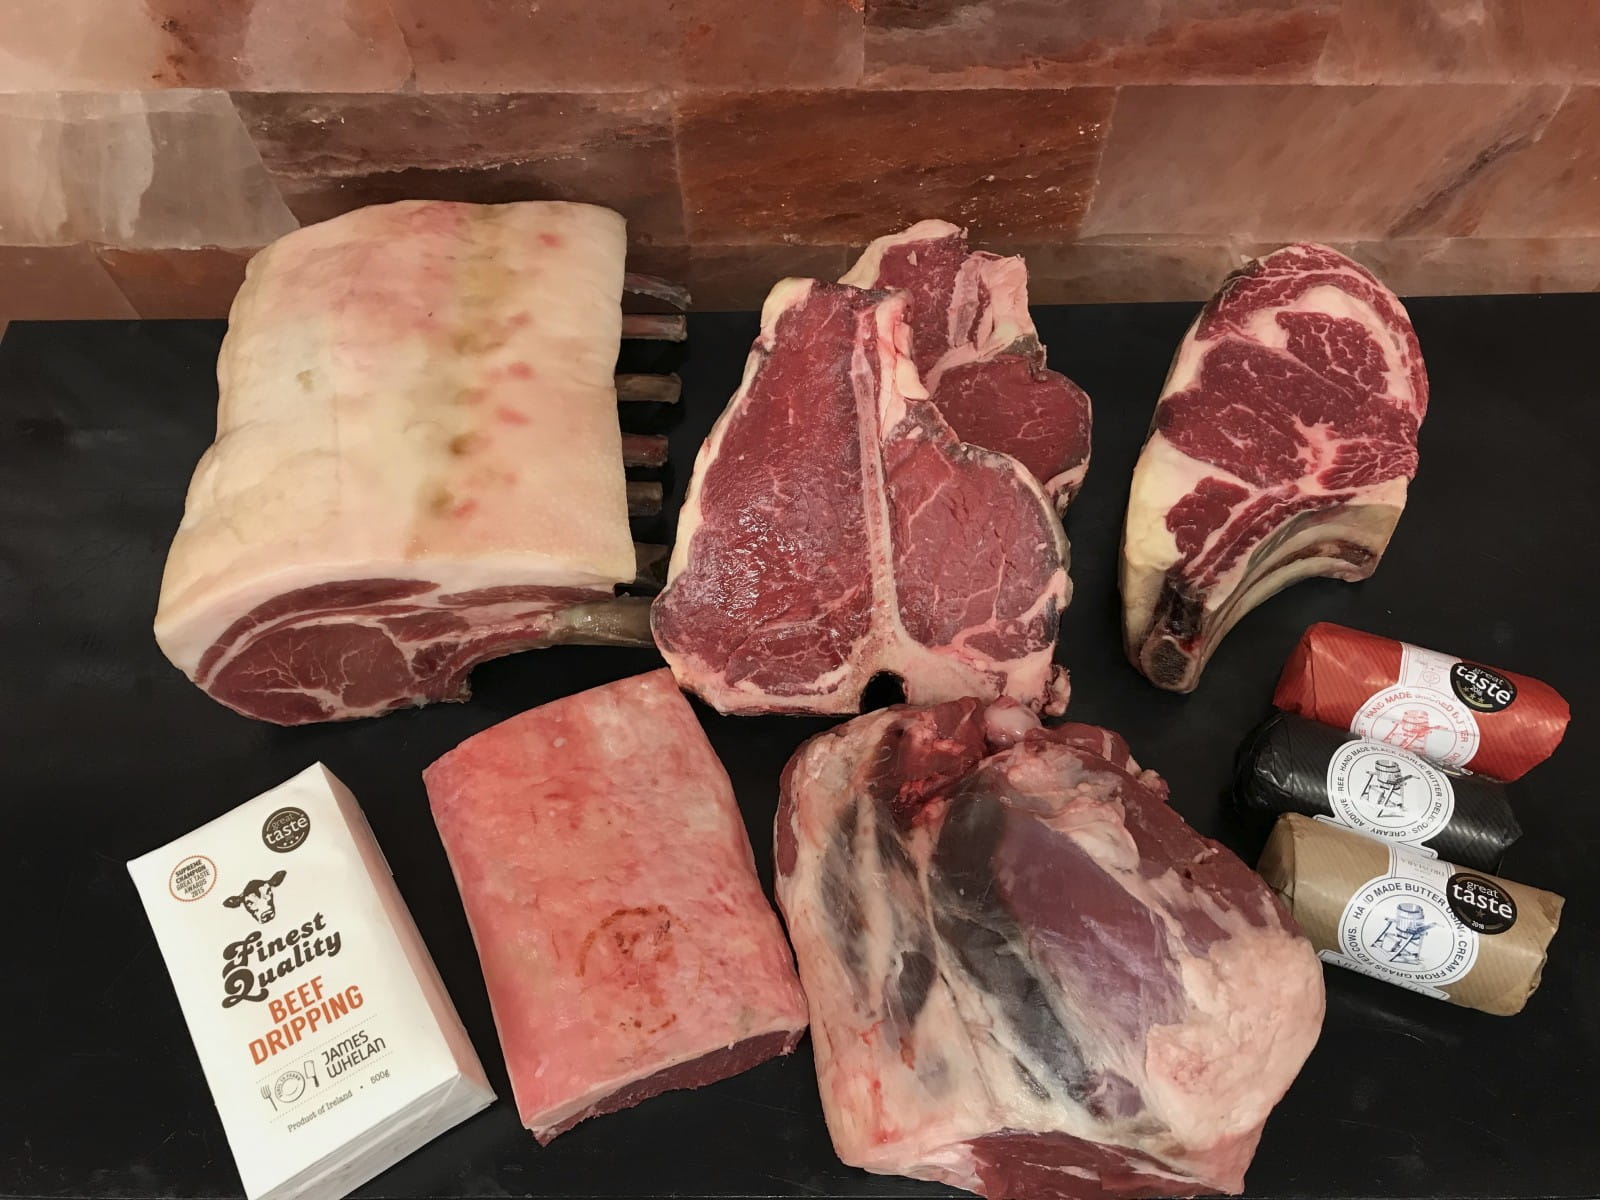 Win a fabulous meat hamper from award-winning butcher Peter Hannan